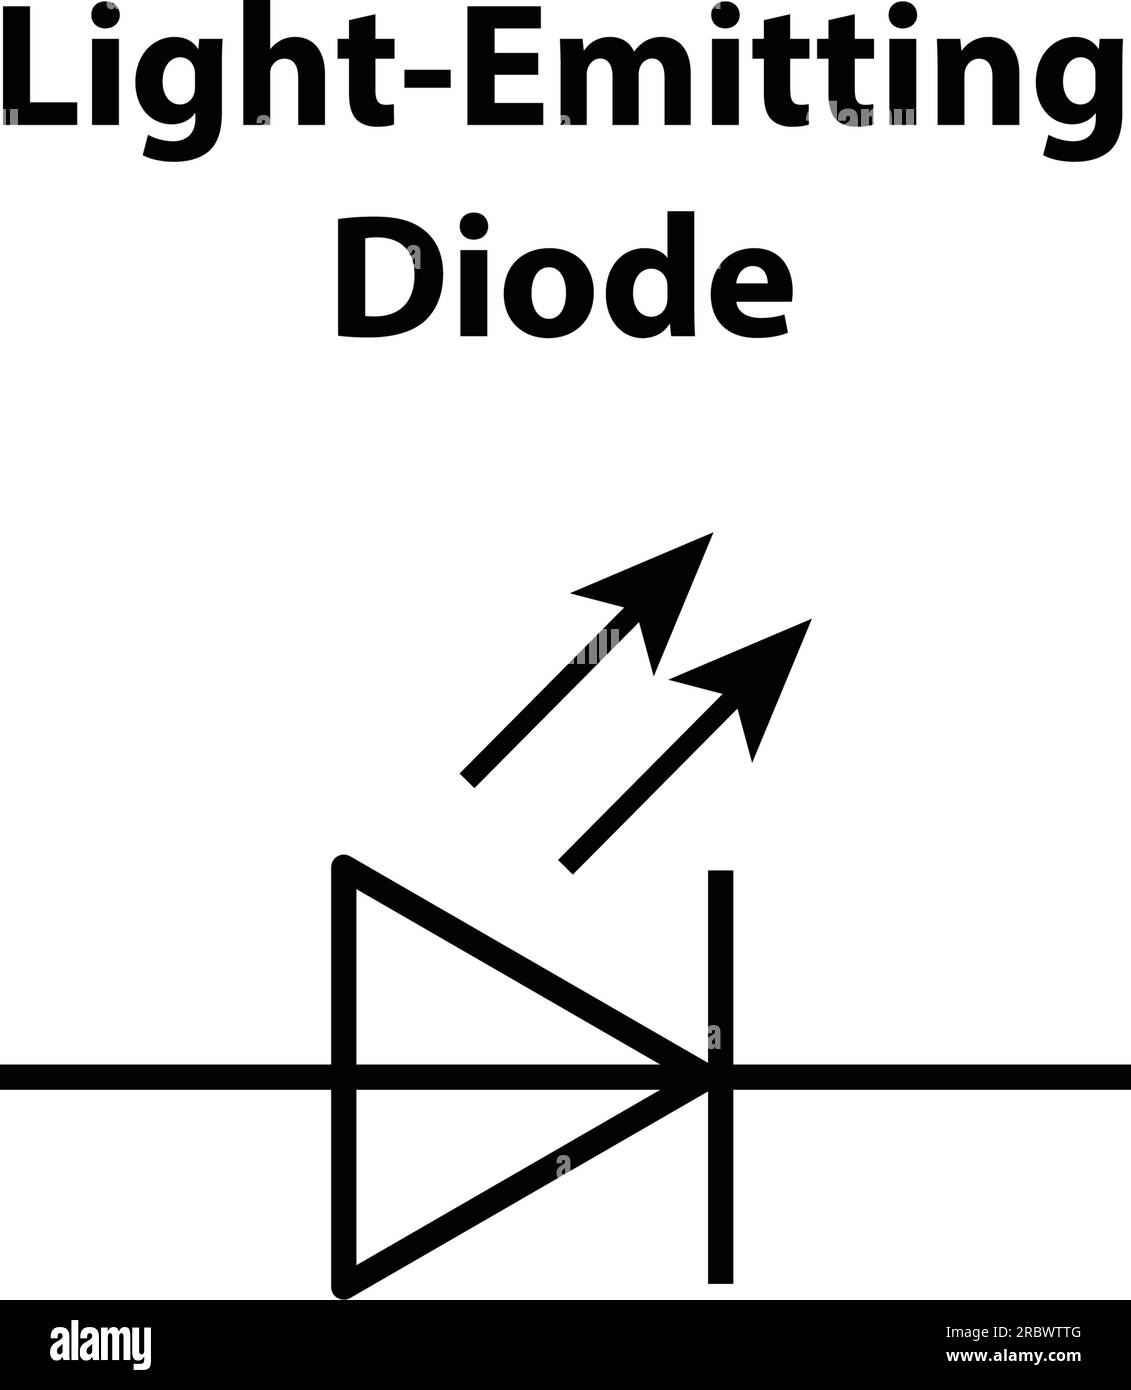 Light-Emitting Diode. electronic symbol. Illustration of basic circuit ...